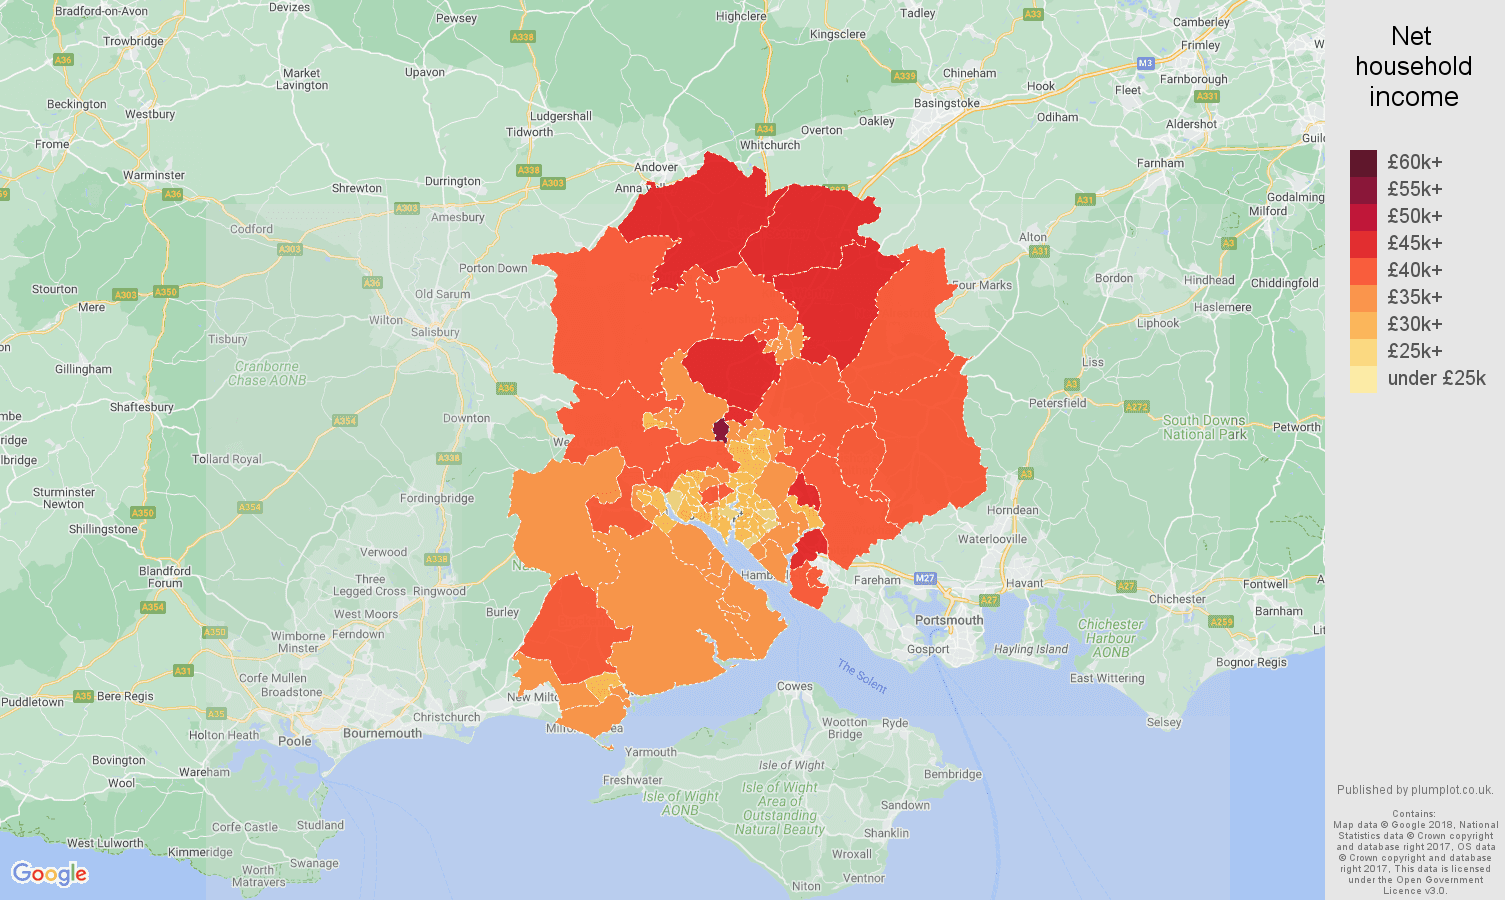 Southampton net household income map